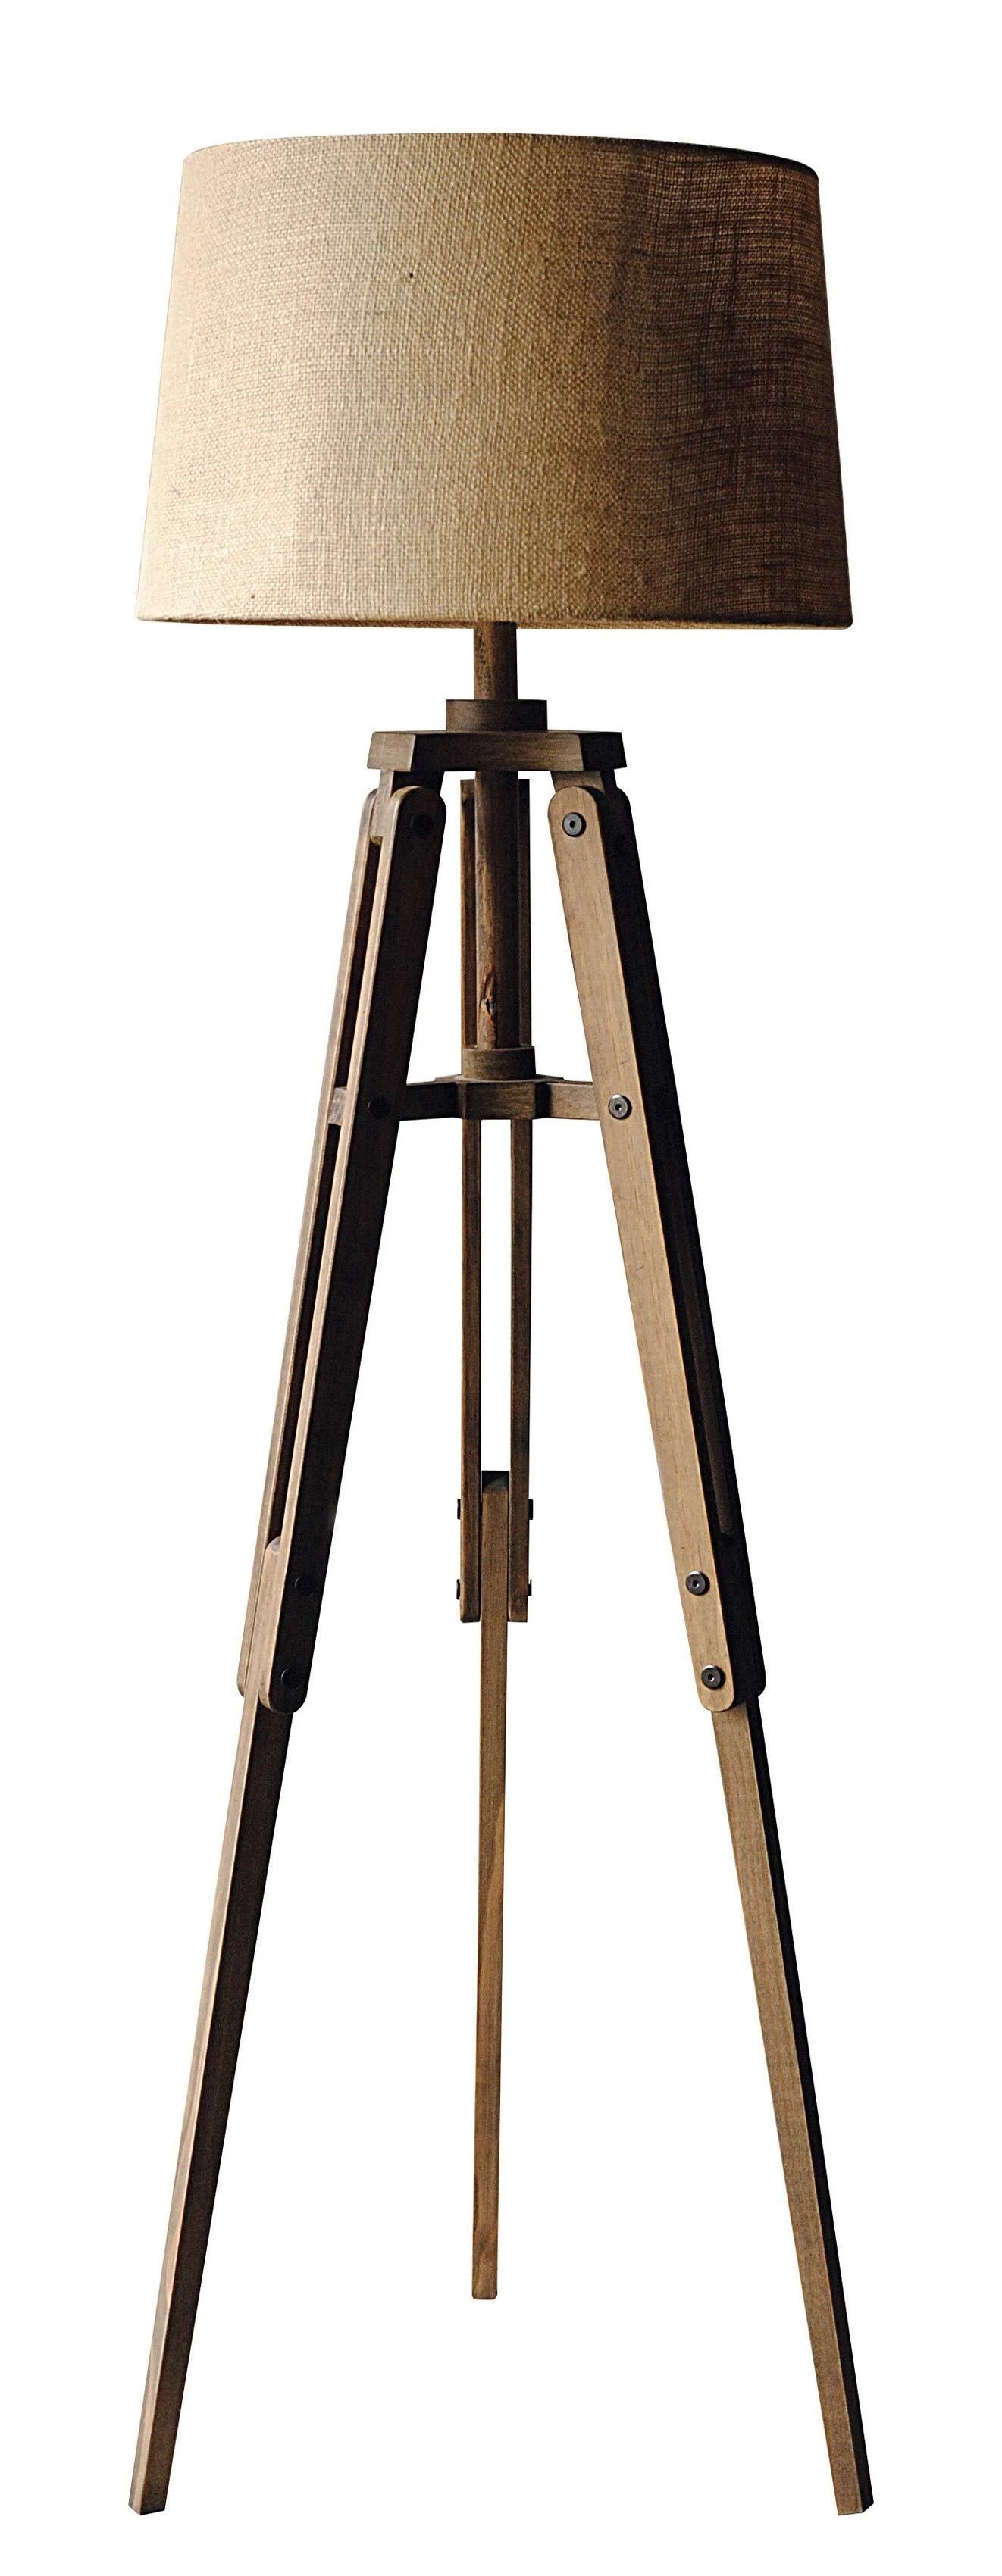 Mariner Tripod Style Wood Floor Lamp with Burlap Drum Shade - Image 0